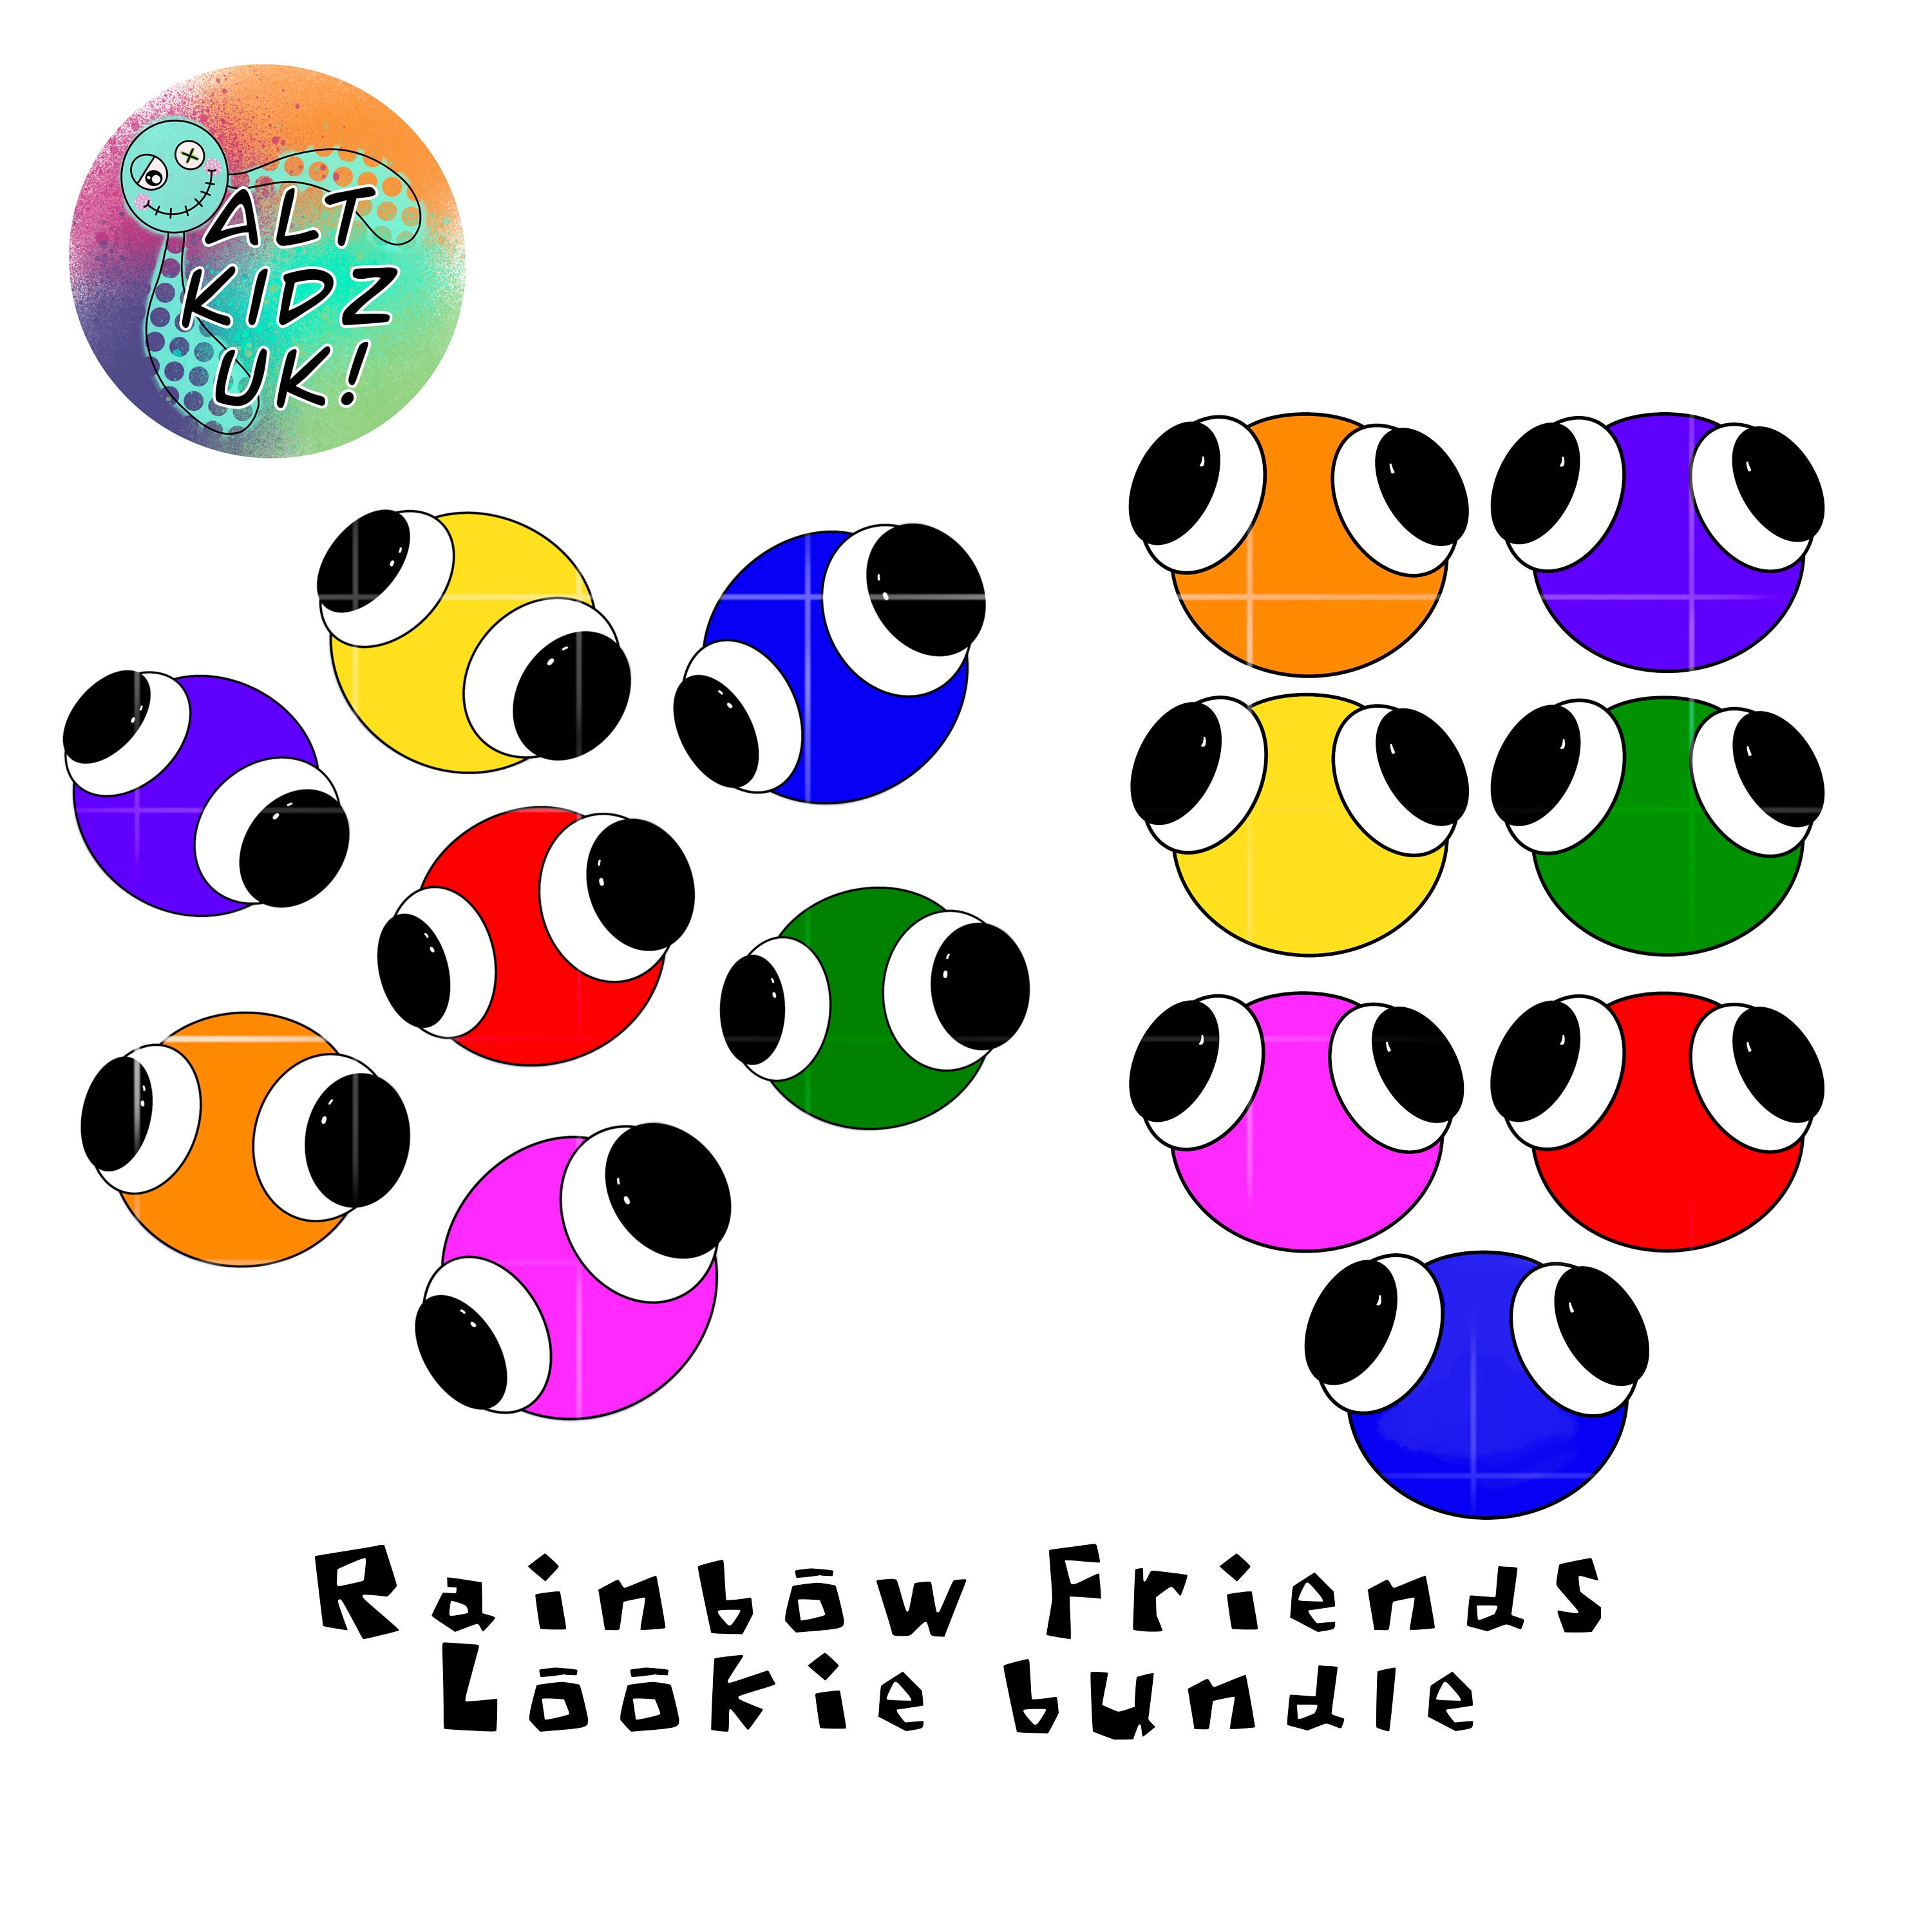 Rainbow Friends 2 Cliparts